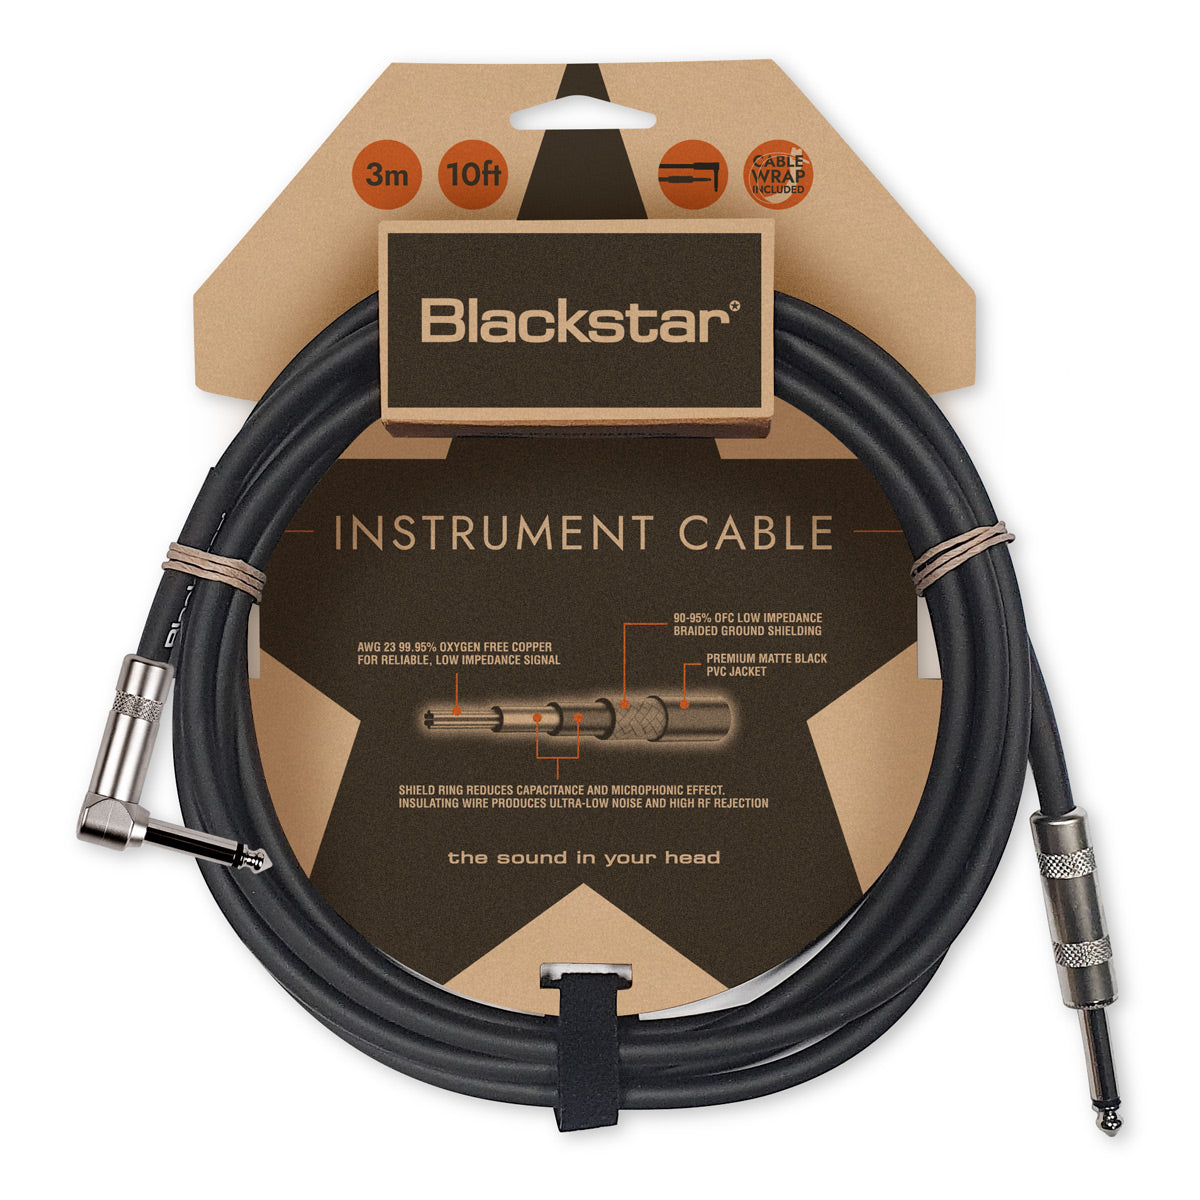 Blackstar instrument cable